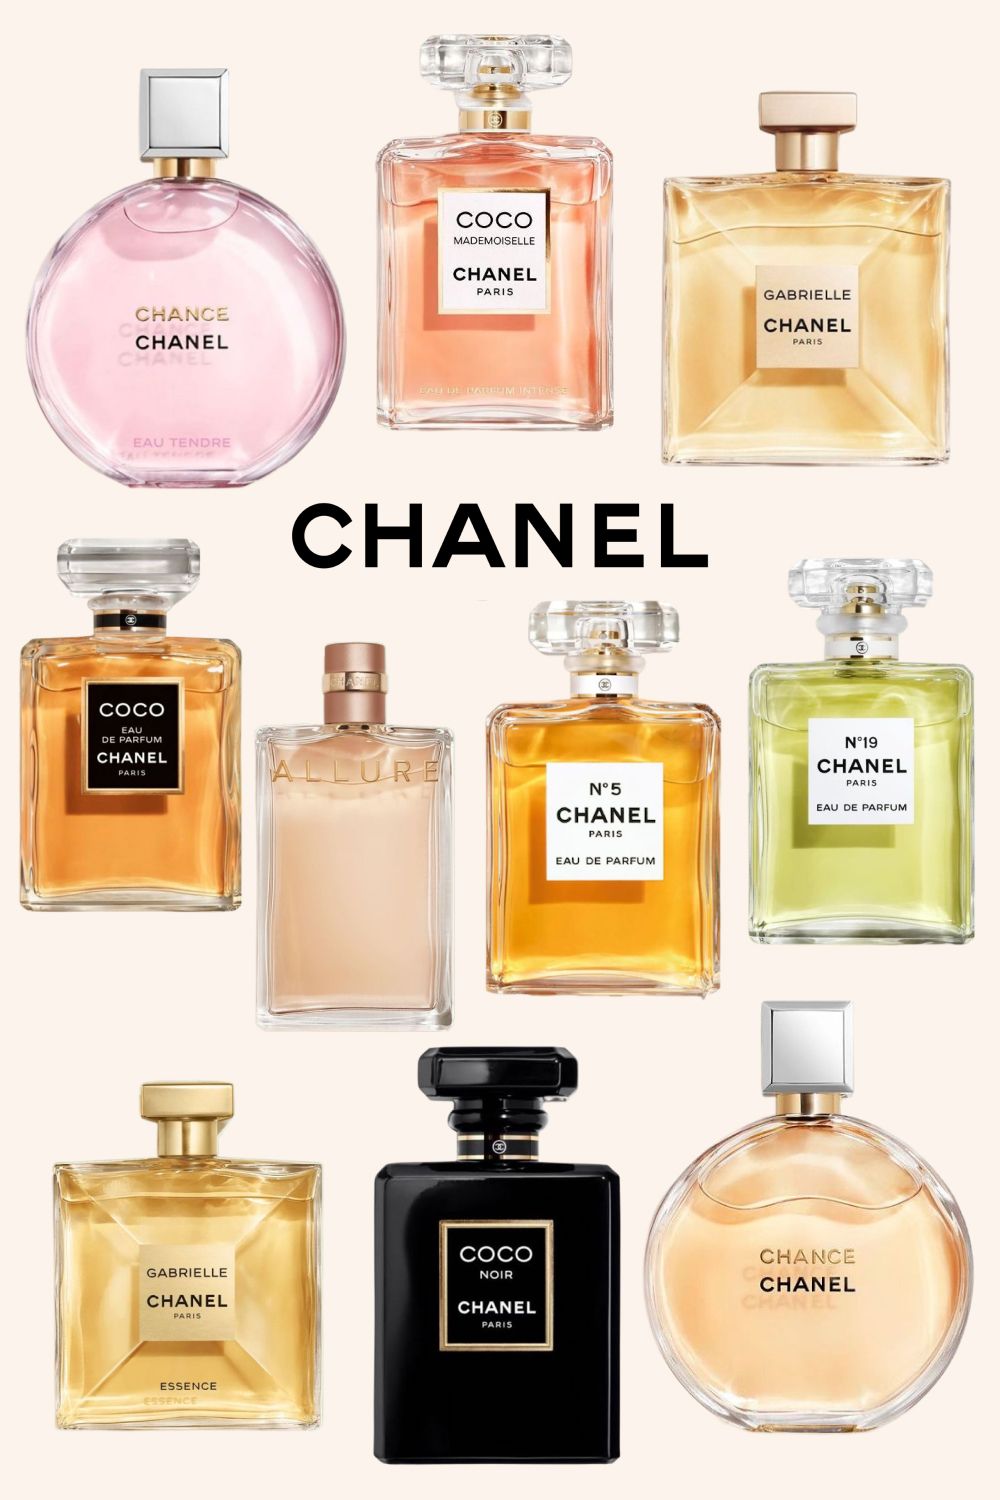 COCO Mademoiselle Chanel Paris Eau de ParfumBestseller Perfume for Women   Shopee Philippines